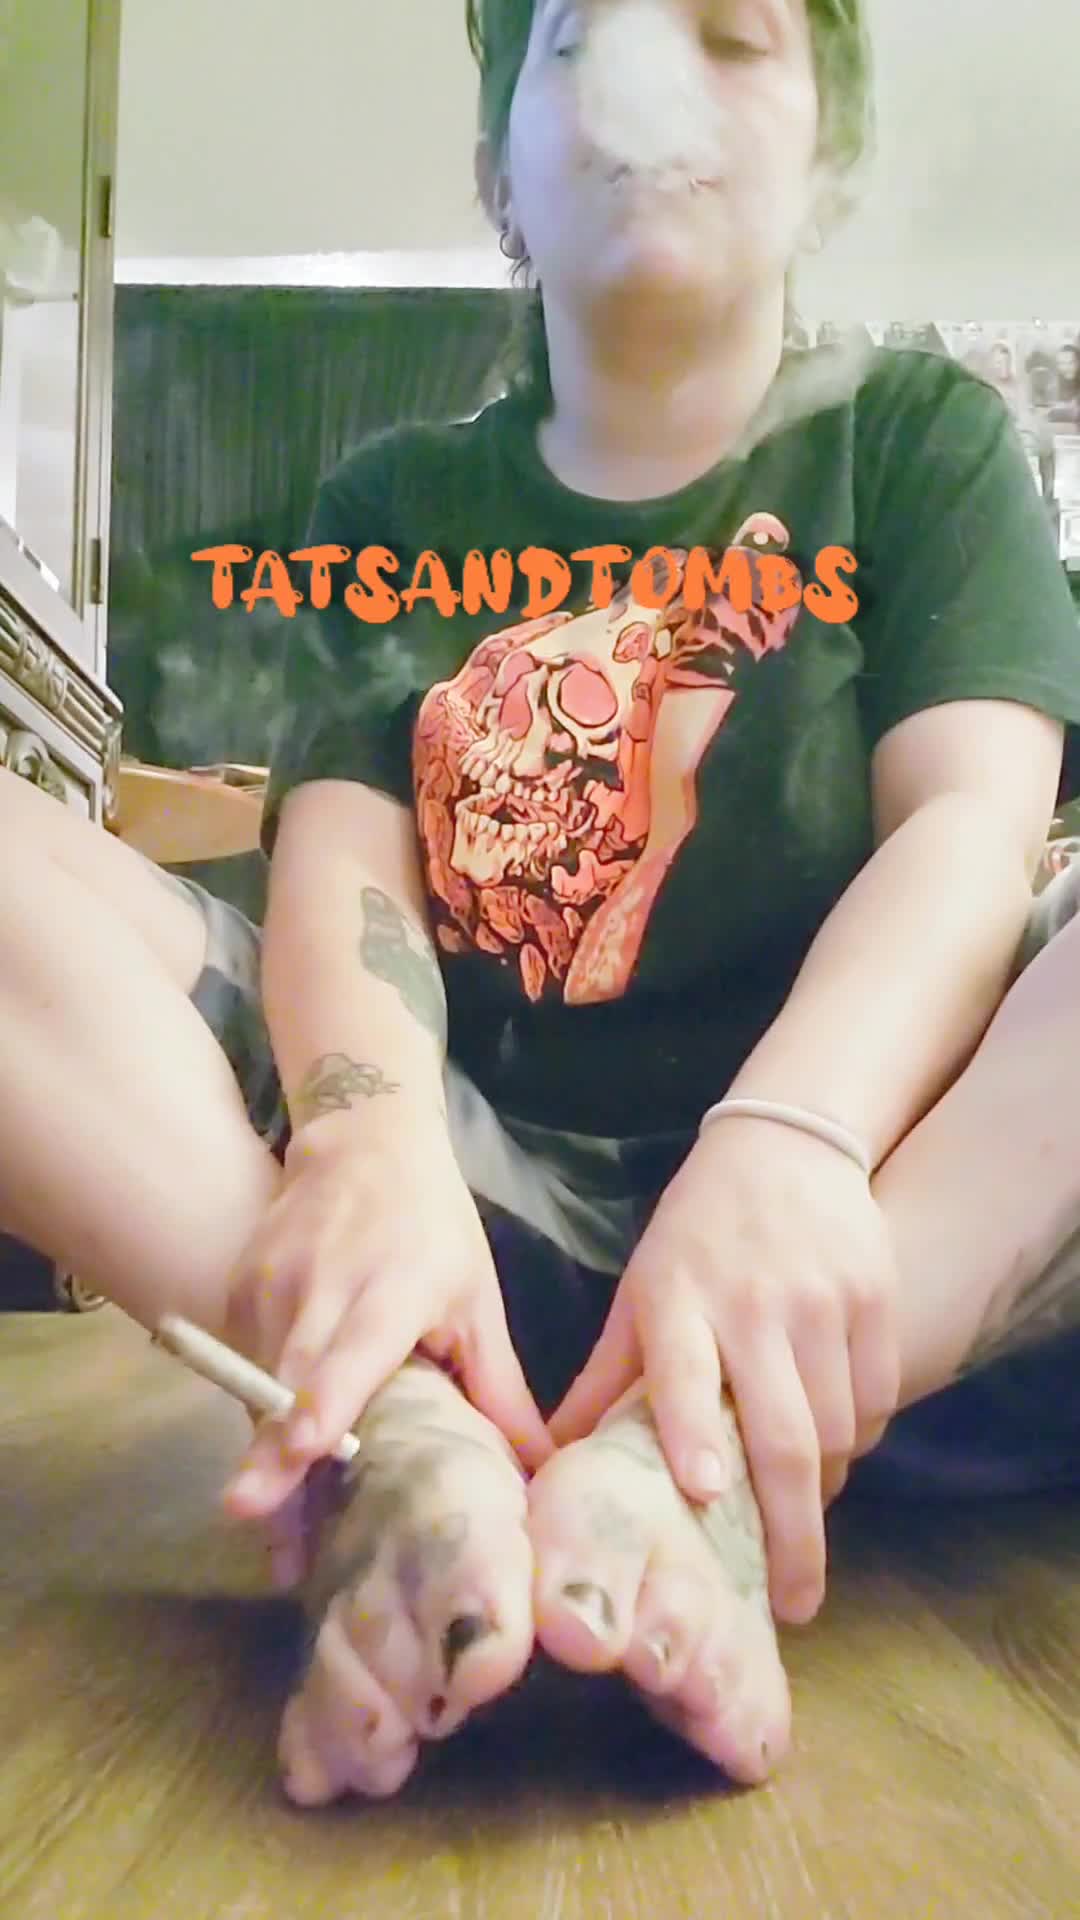 TatsAndTombs - Adult Love Addiction Slide Show